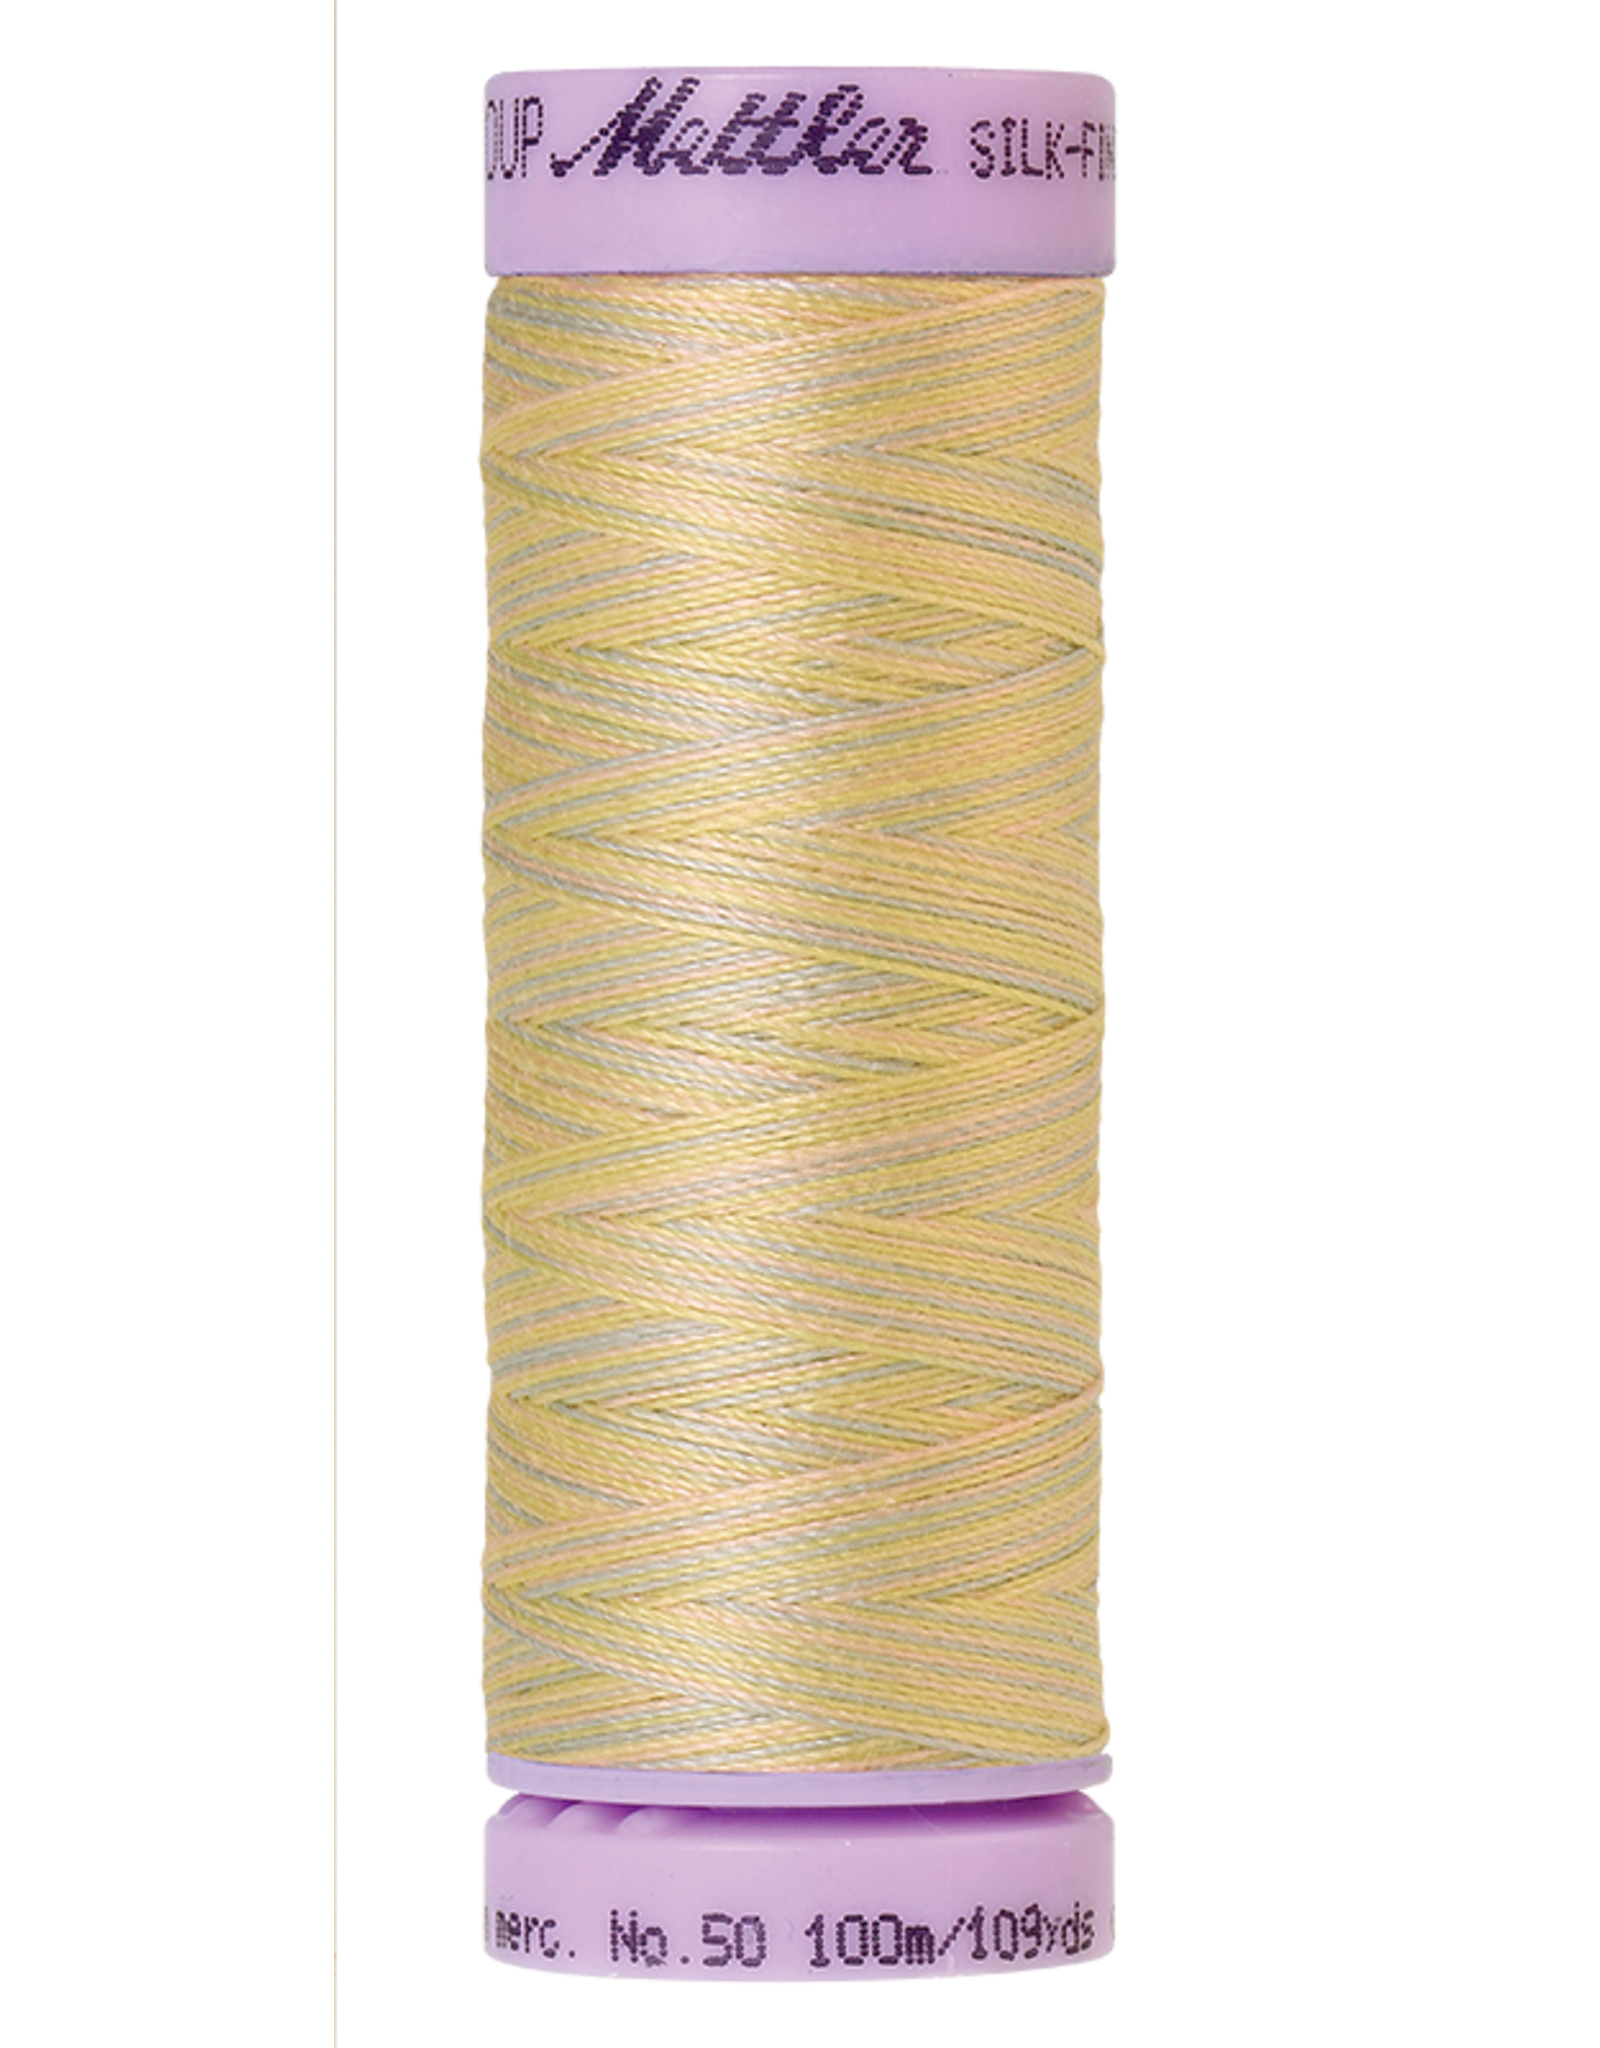 Mettler Silk Finish Cotton Multi 50 - 100 meter 9844 - Palest Pastels